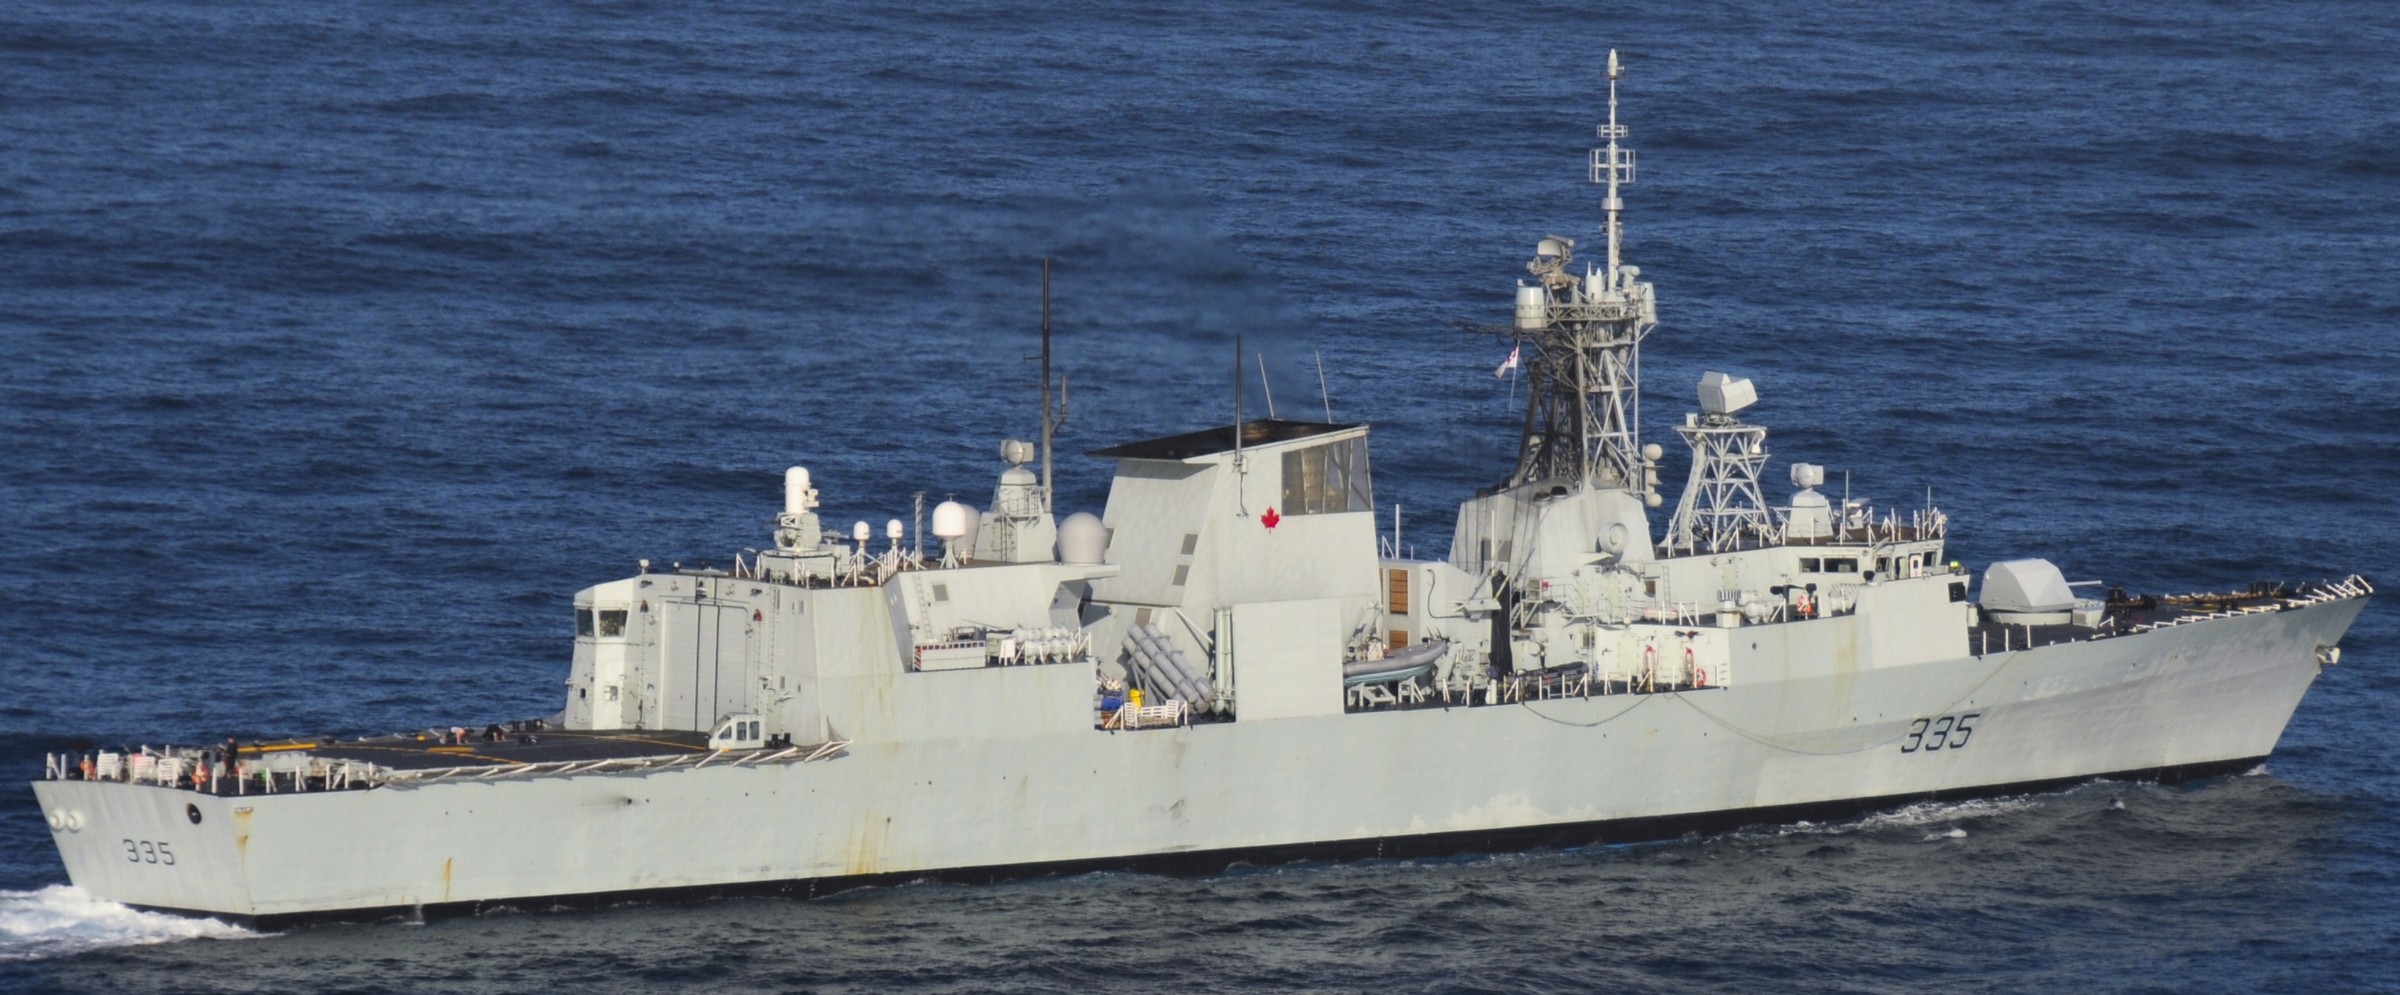 ffh-335 hmcs calgary halifax class helicopter patrol frigate ncsm royal canadian navy 14